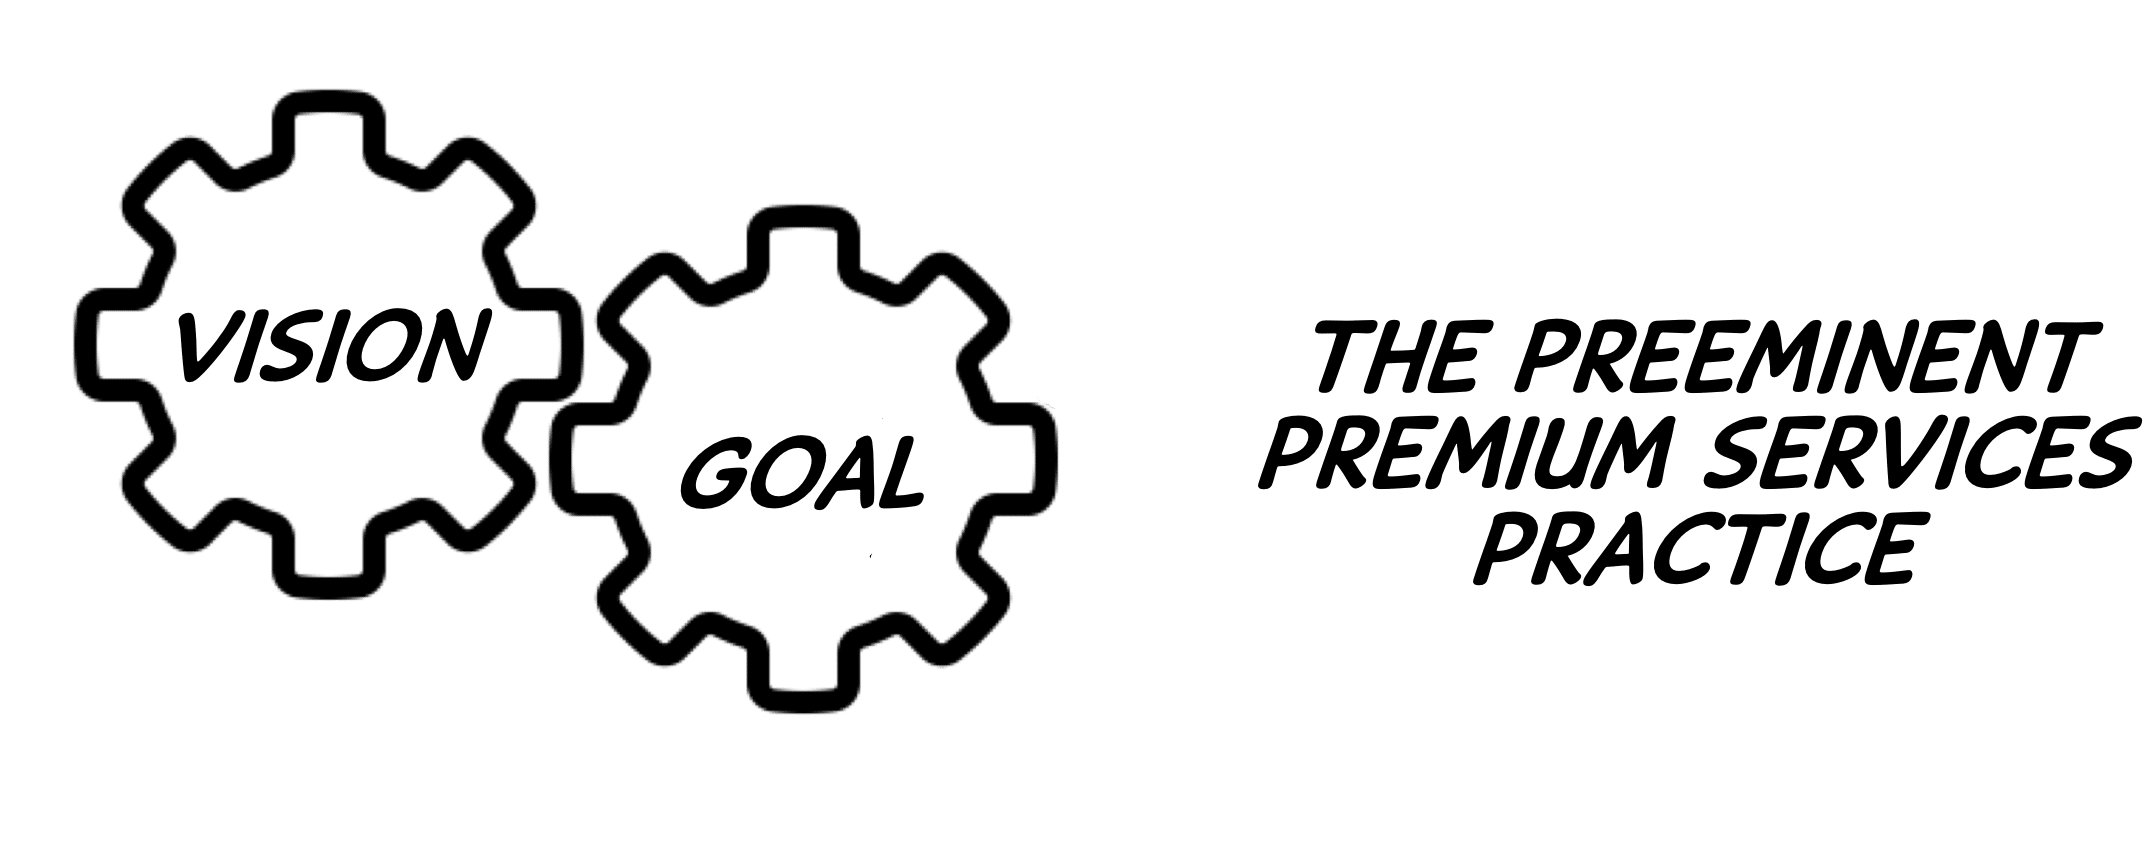 Goal: The Preeminent Premium Services Practice